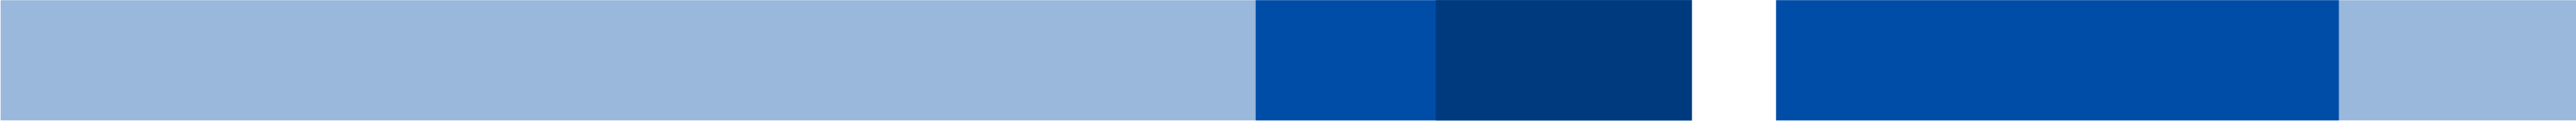 Decorative blue banner